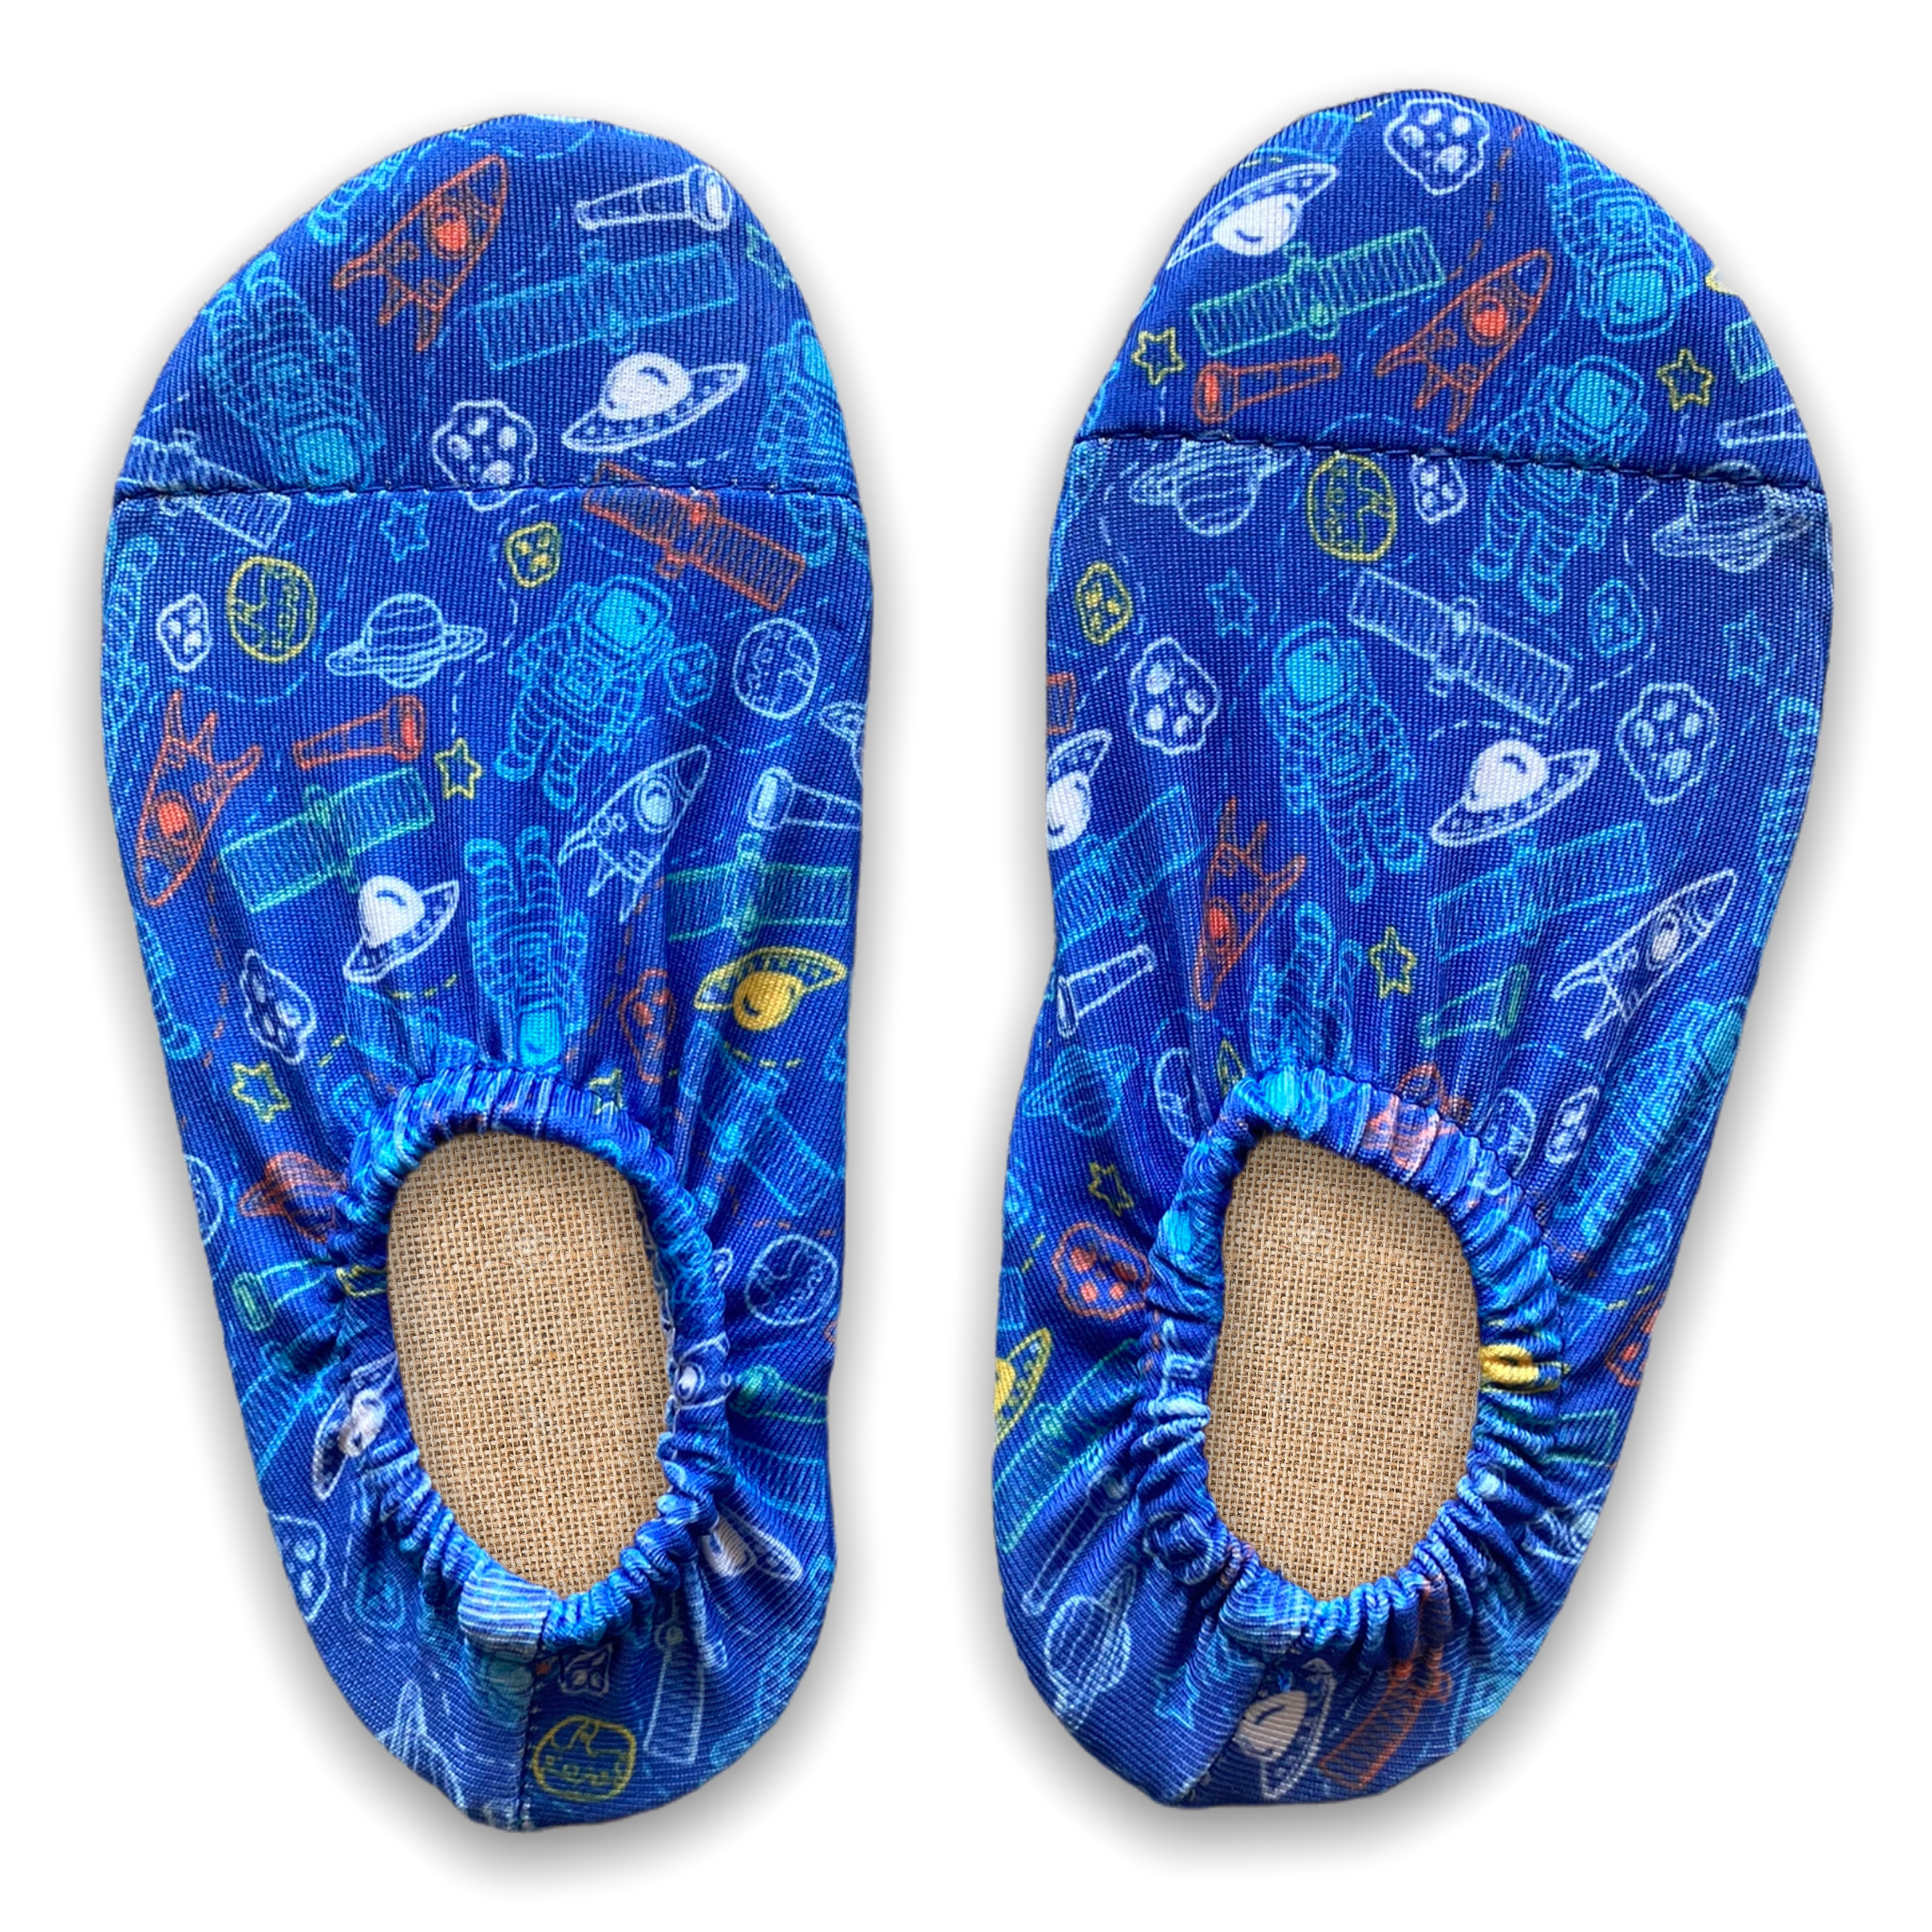 Children’s Non-slip Swim Shoes, Beach Shoes, Space design